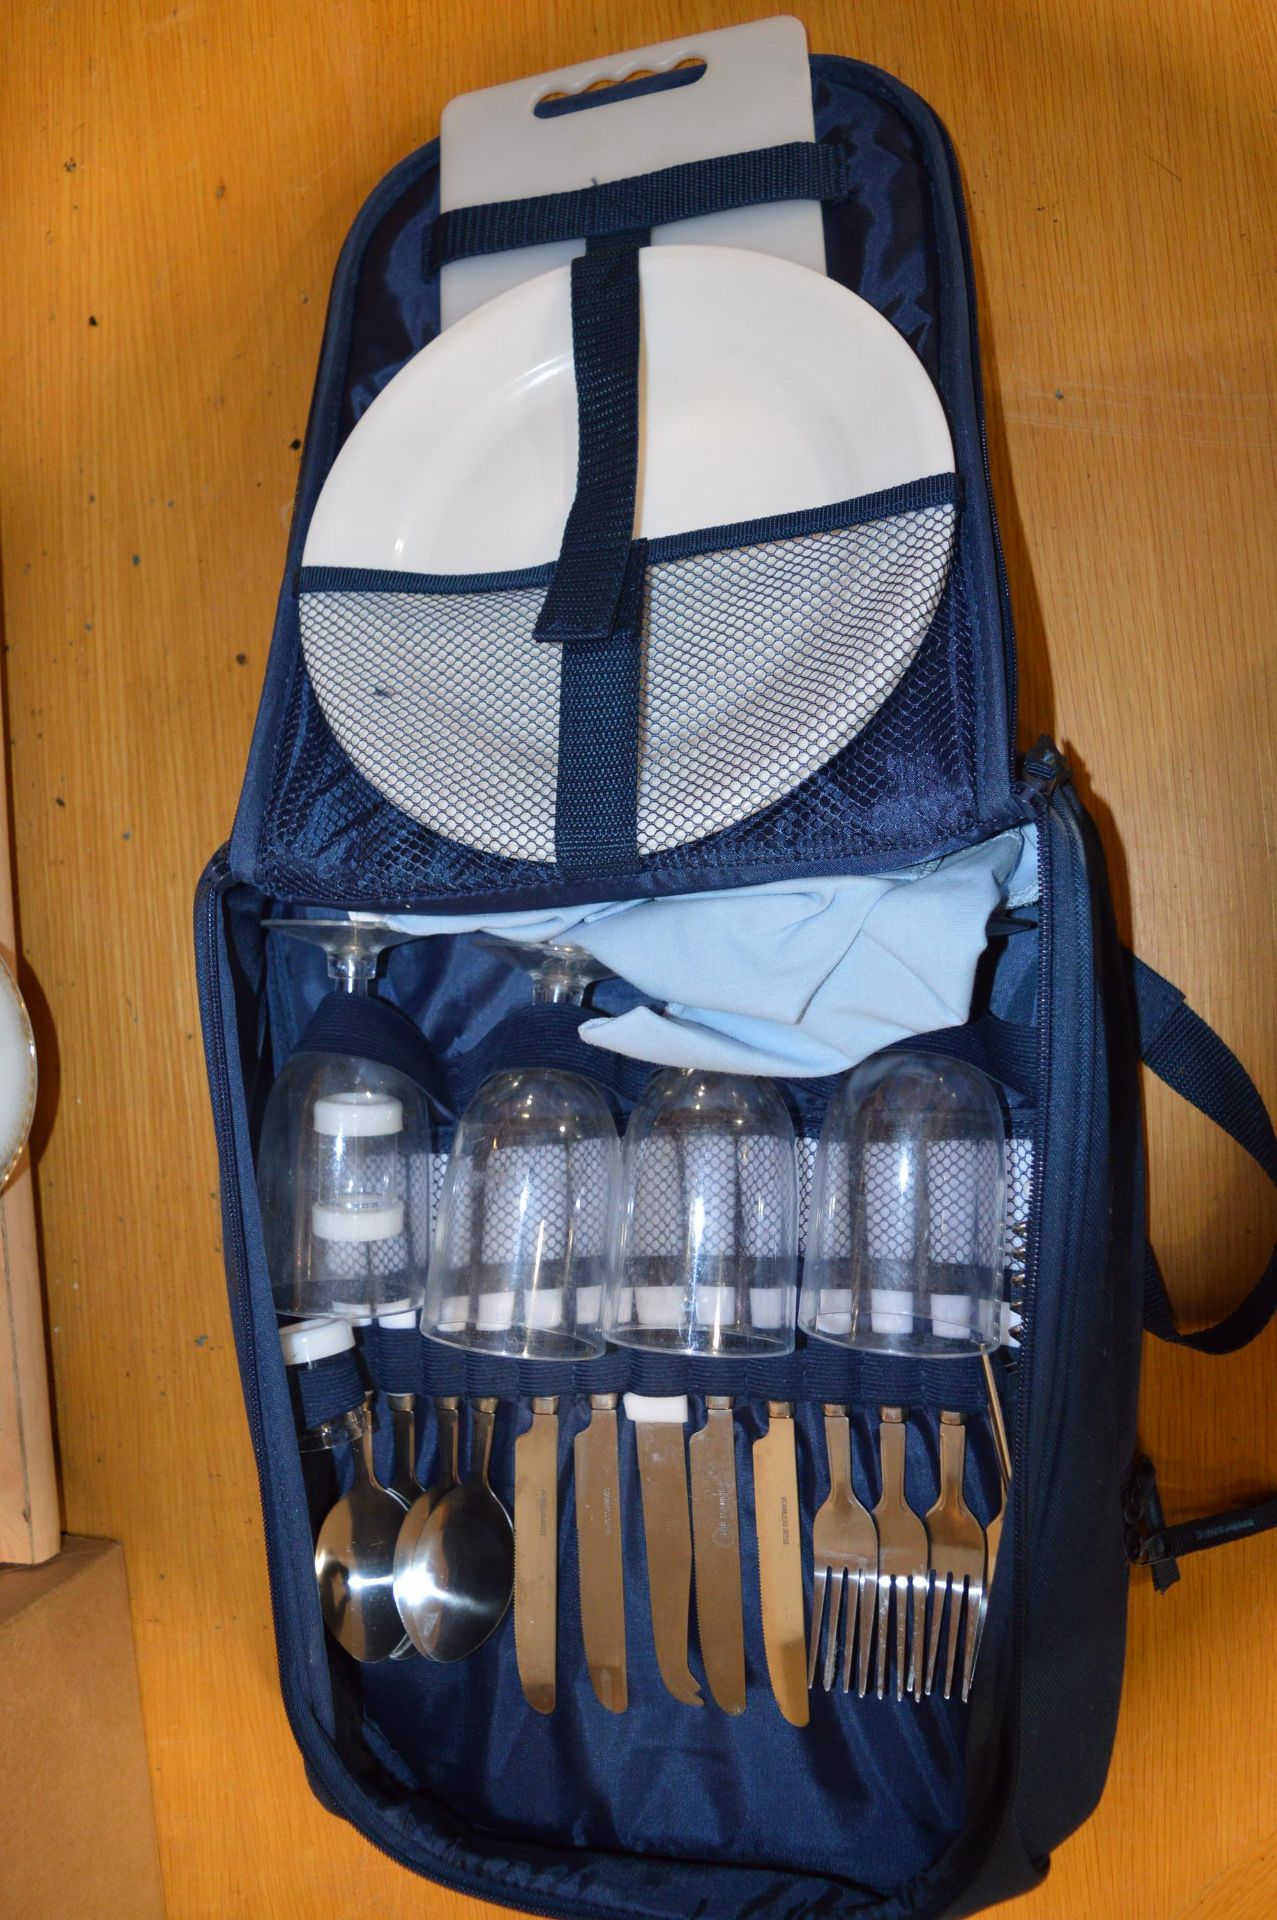 Higear Picnic Set in Bag